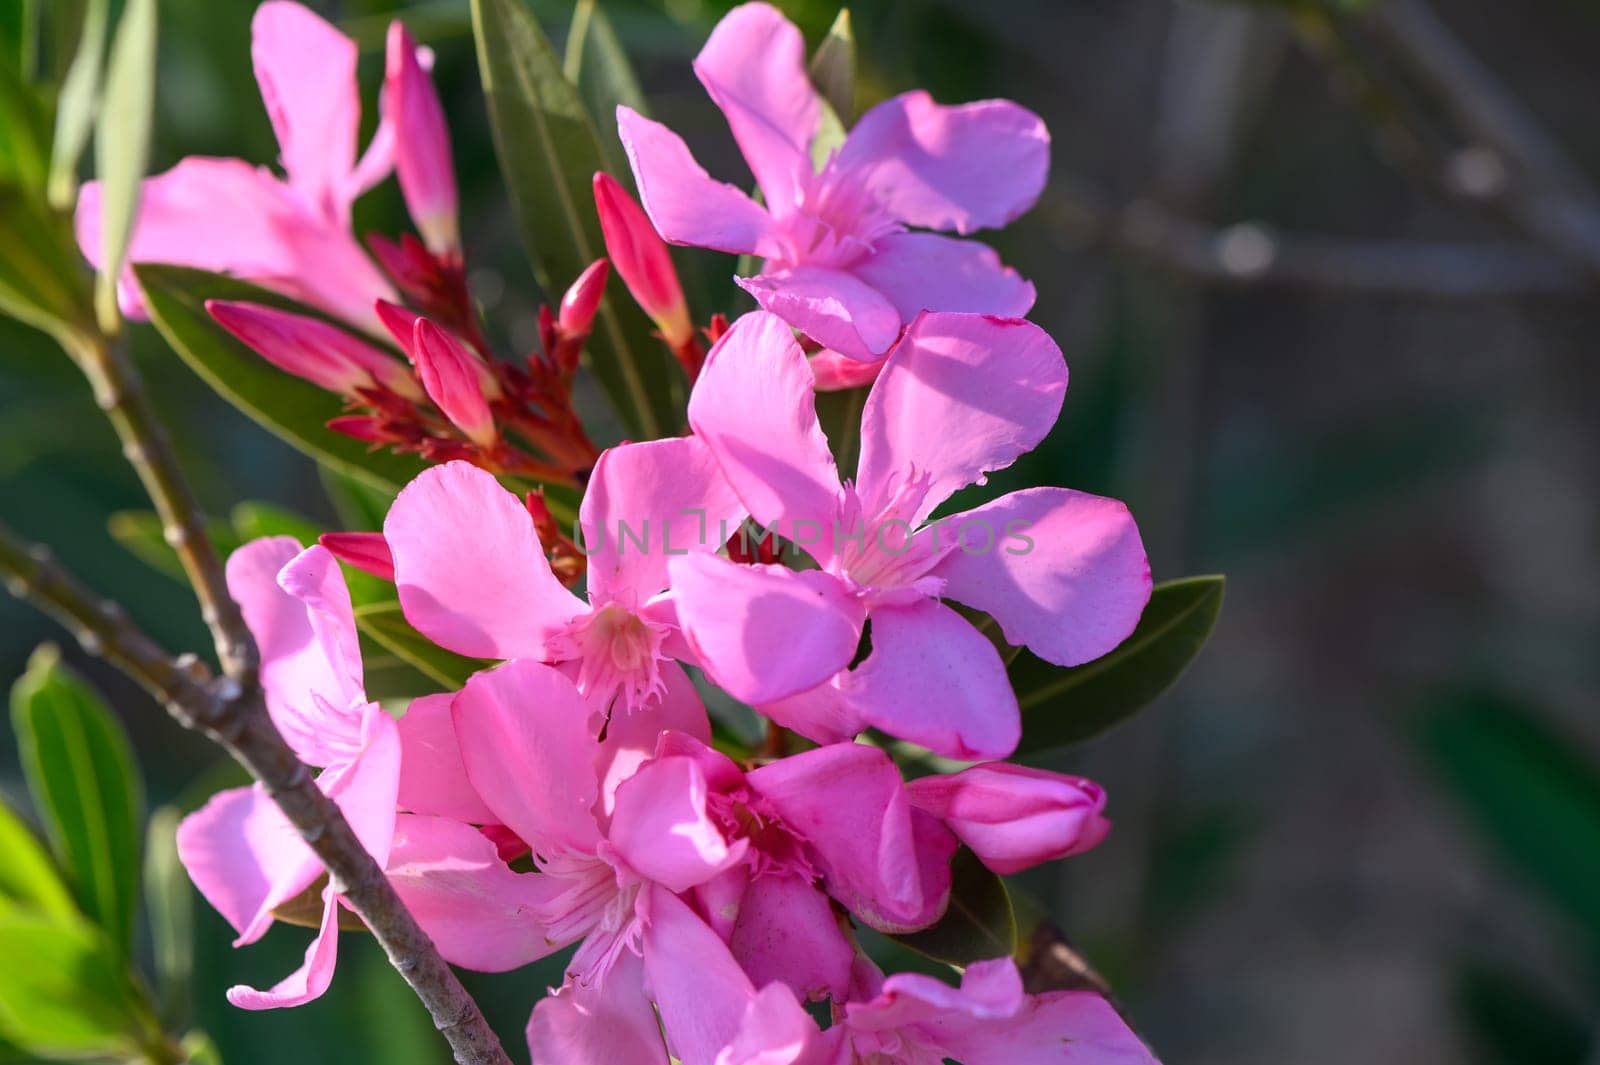 Nerium Nerium oleander flowers in bloom in pink color by Mixa74